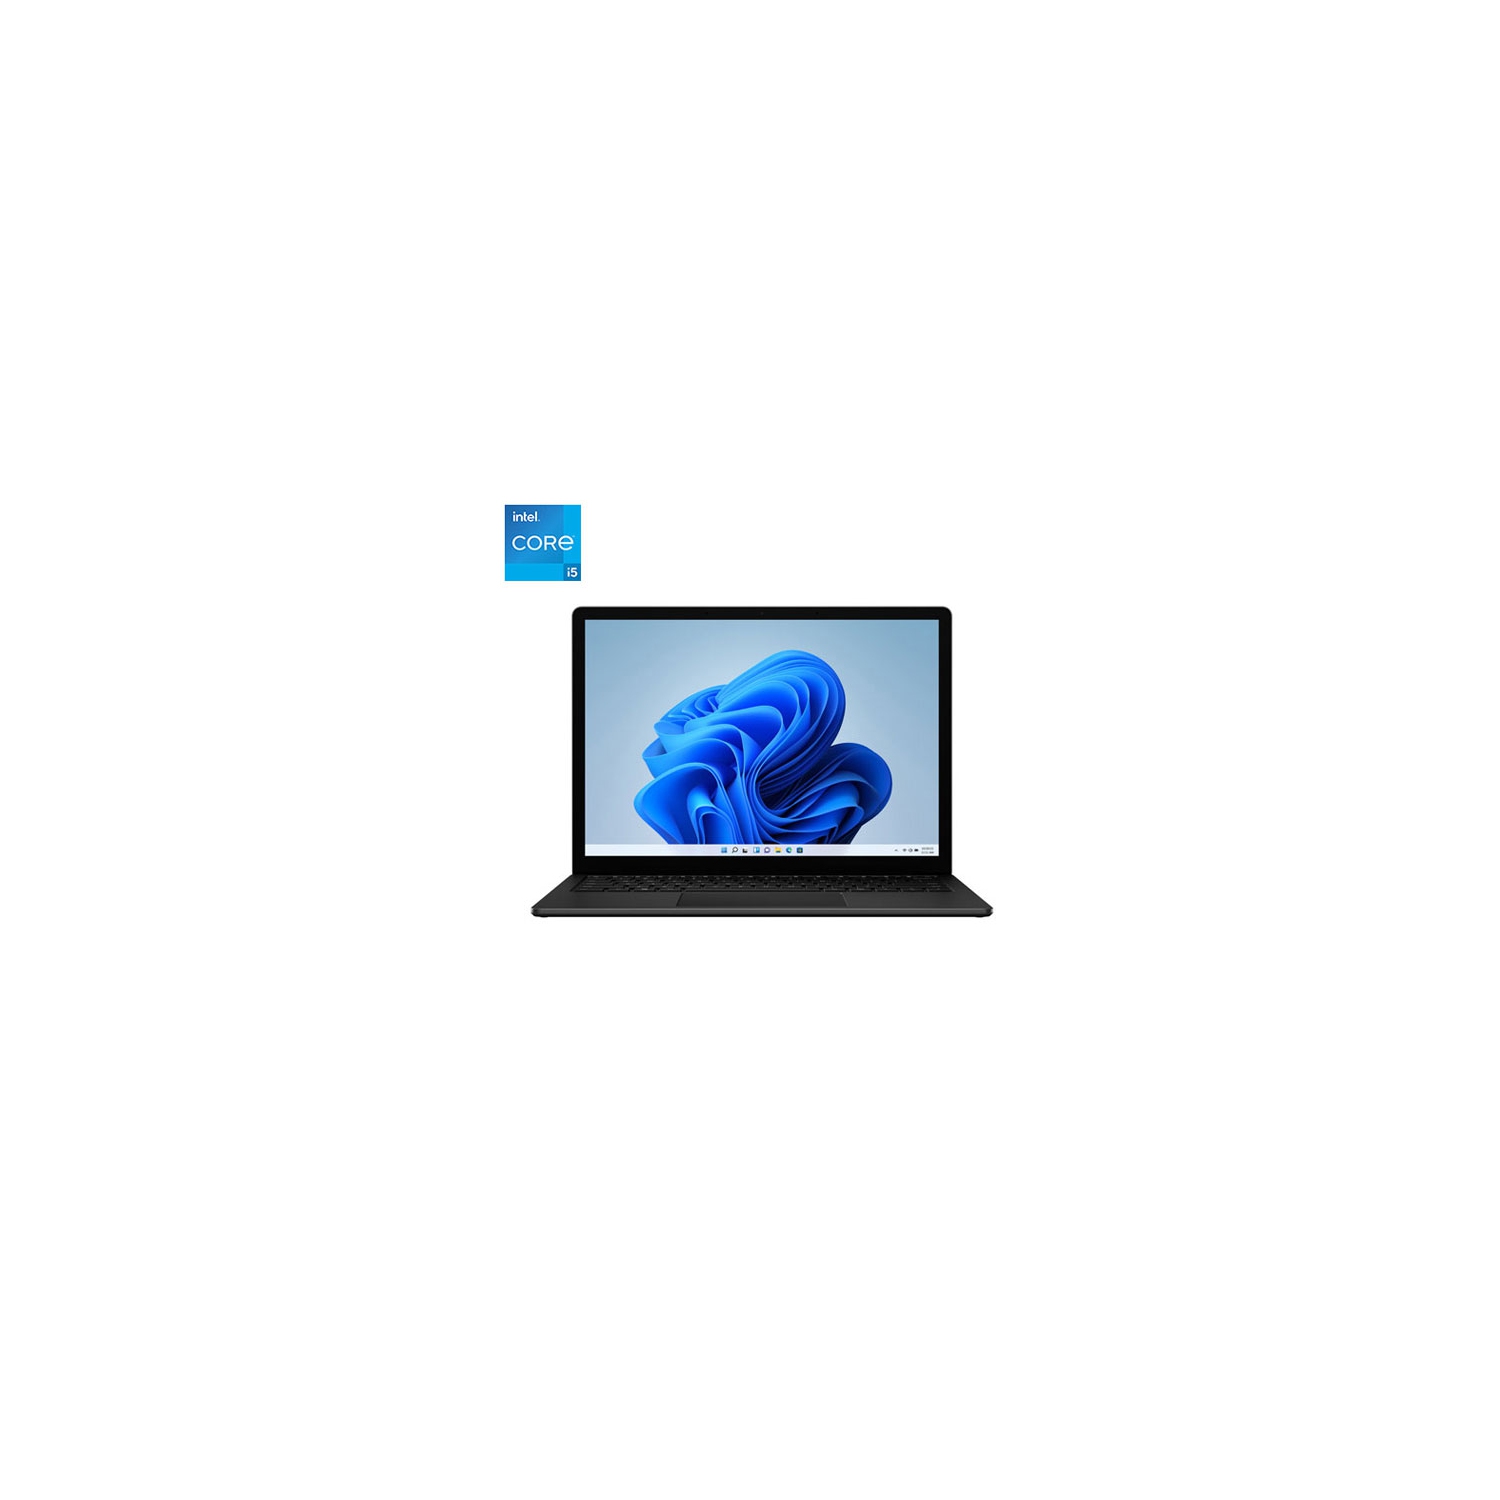 Refurbished (Excellent) - Microsoft Surface Laptop 4 Touchscreen 13.5" - Matte Black (Intel Core i5-1135G7/512GB SSD/8GB RAM) -Fr